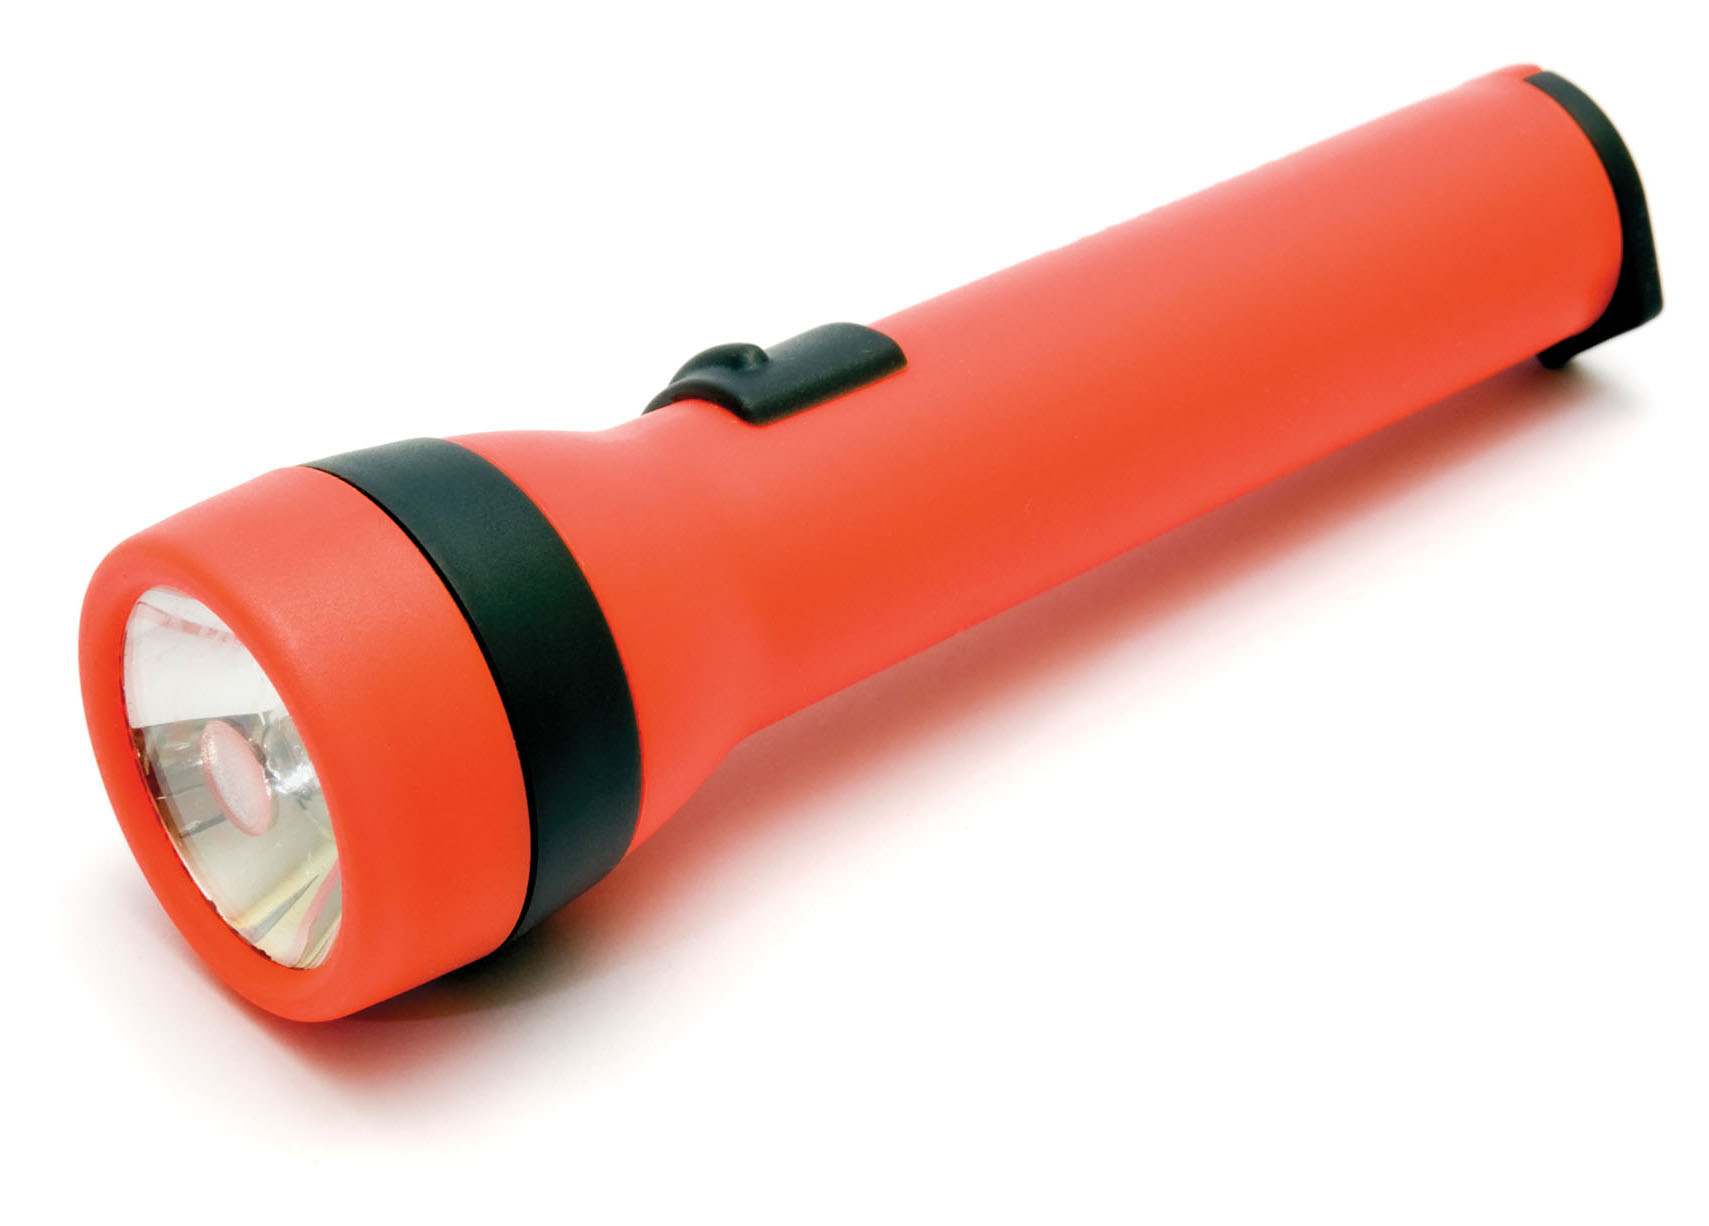 An orange flashlight on a white background